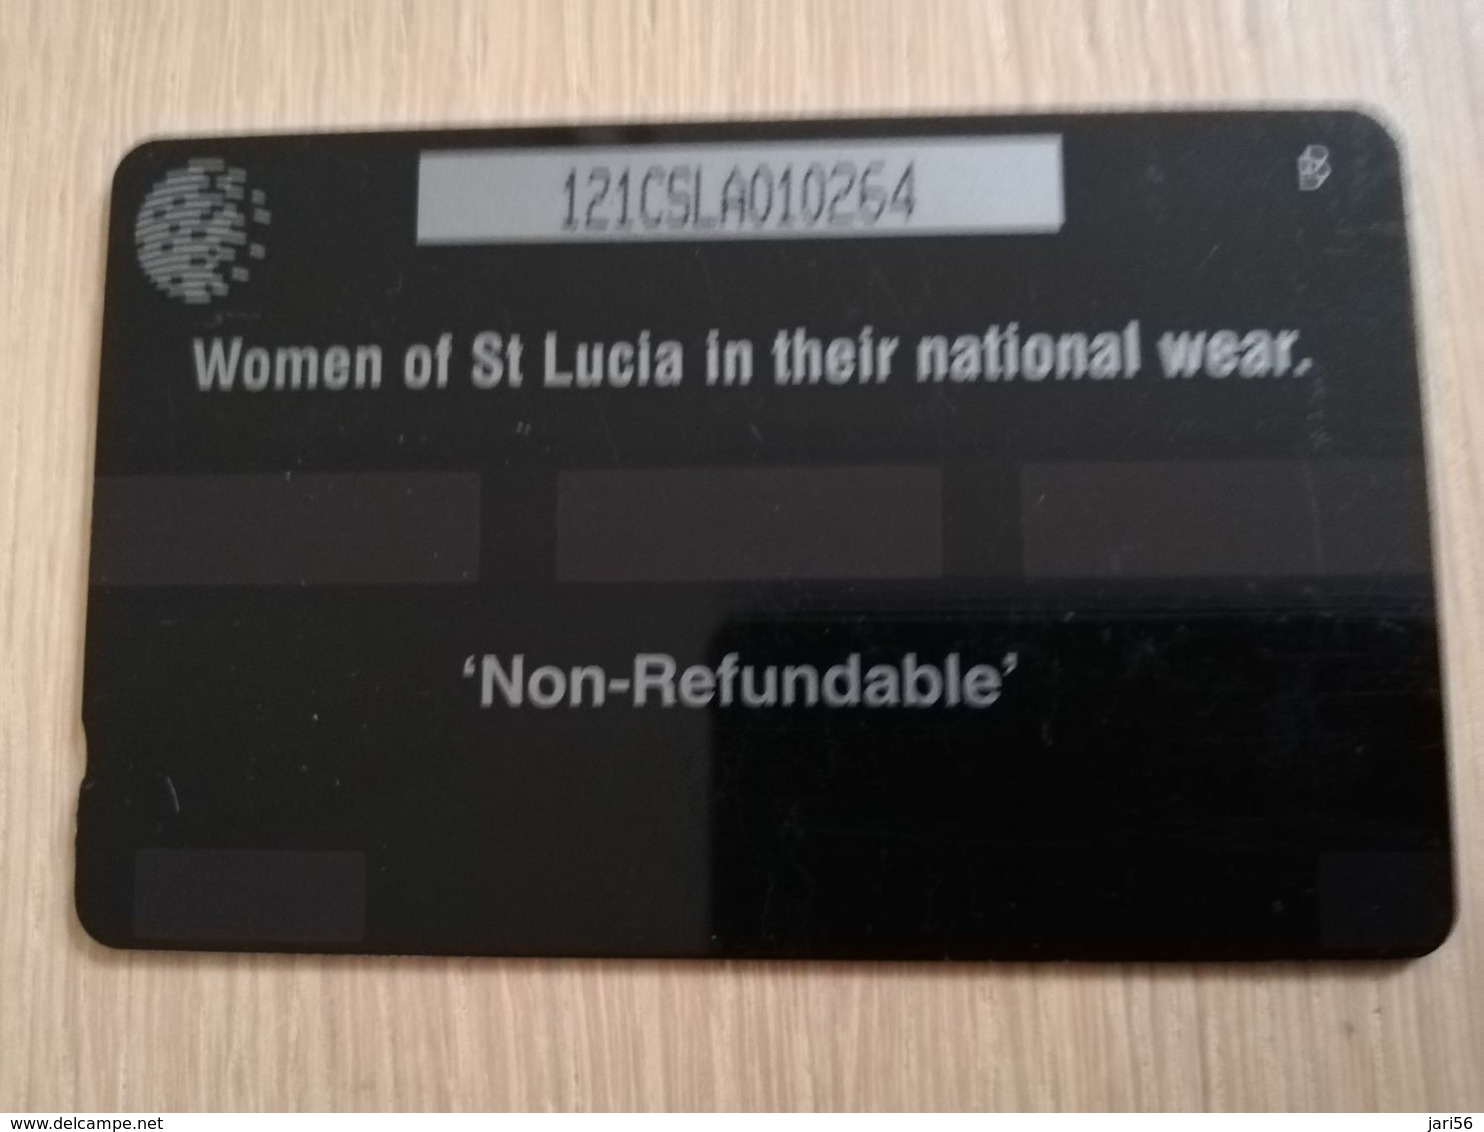 ST LUCIA    $ 20   CABLE & WIRELESS  STL-121A   121CSLA      Fine Used Card ** 2432** - Saint Lucia